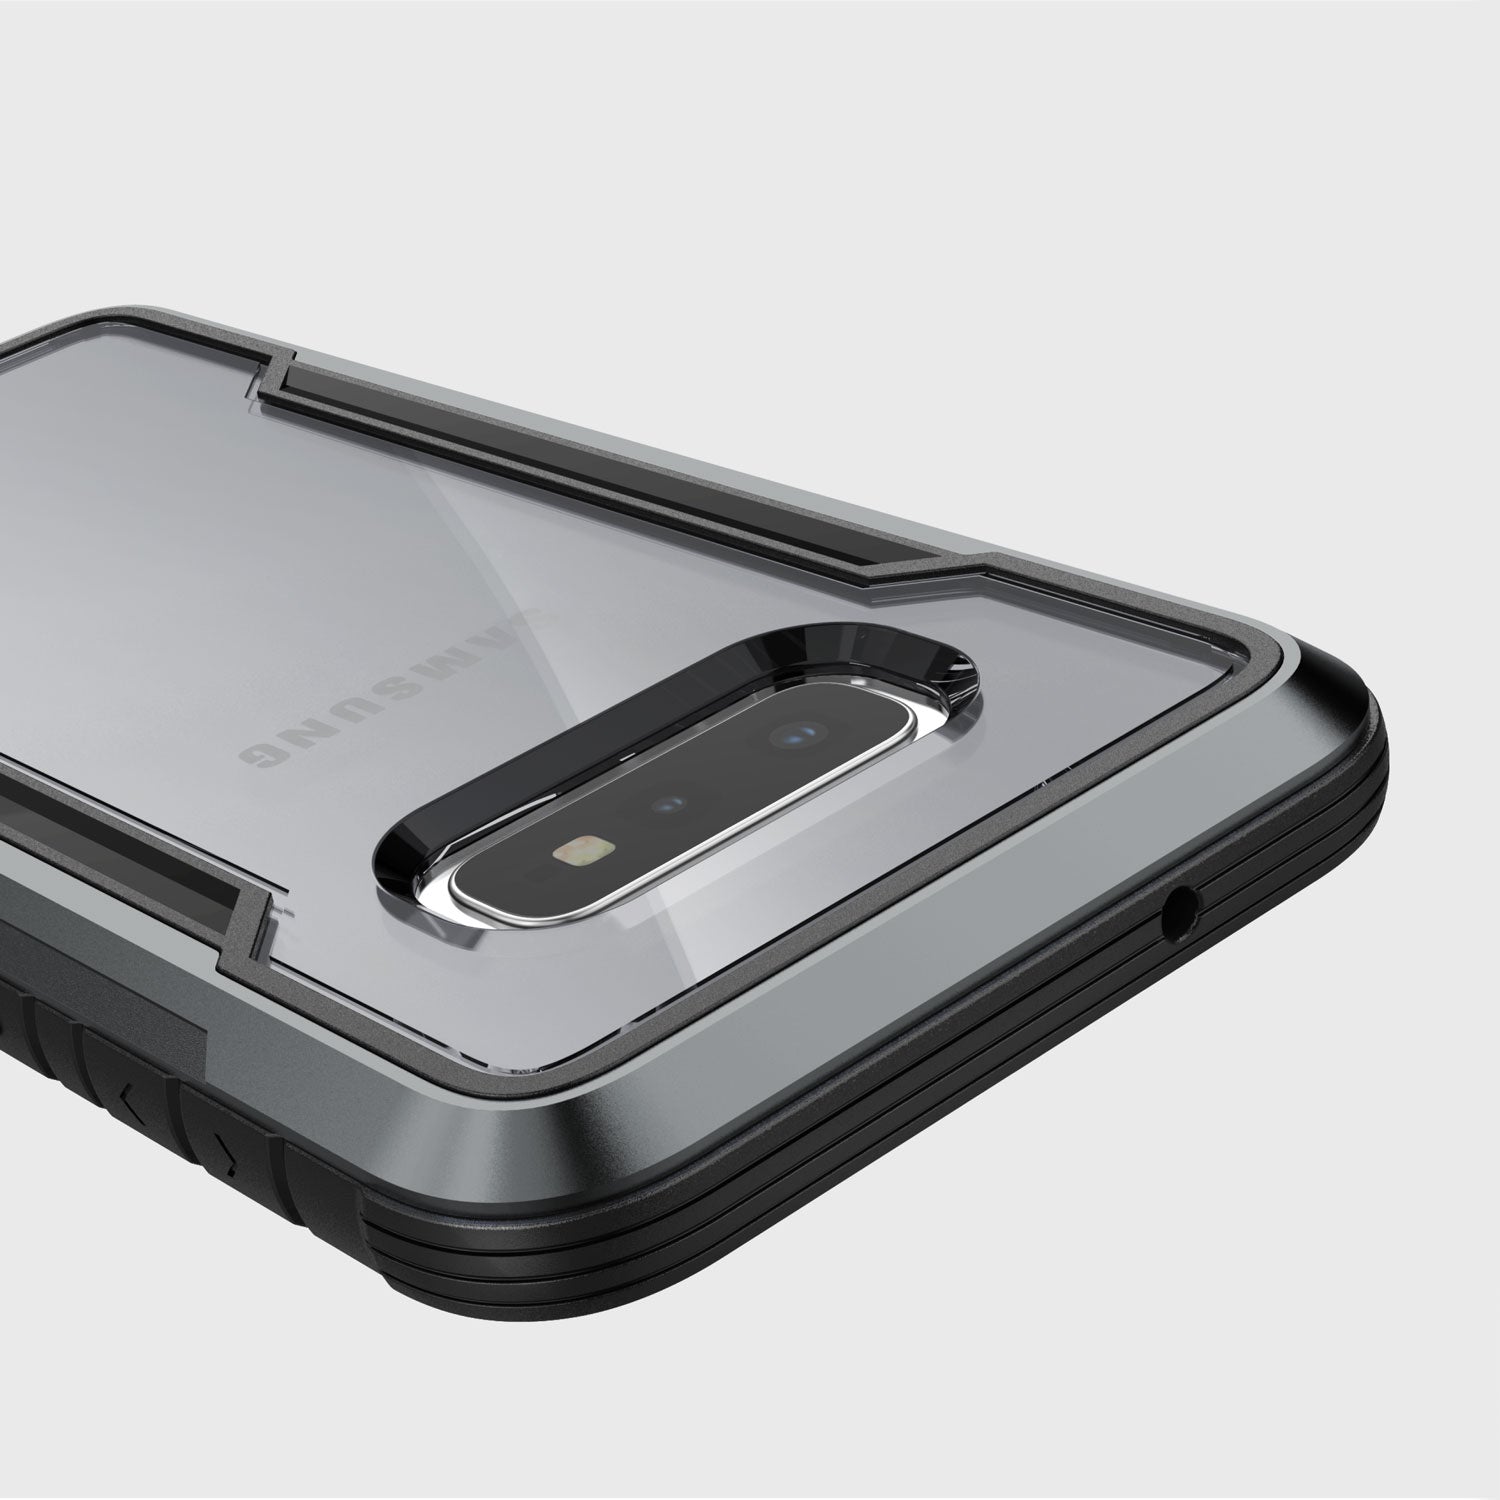 The Raptic Samsung Galaxy S10e Case Shield Black is shown, providing drop protection.